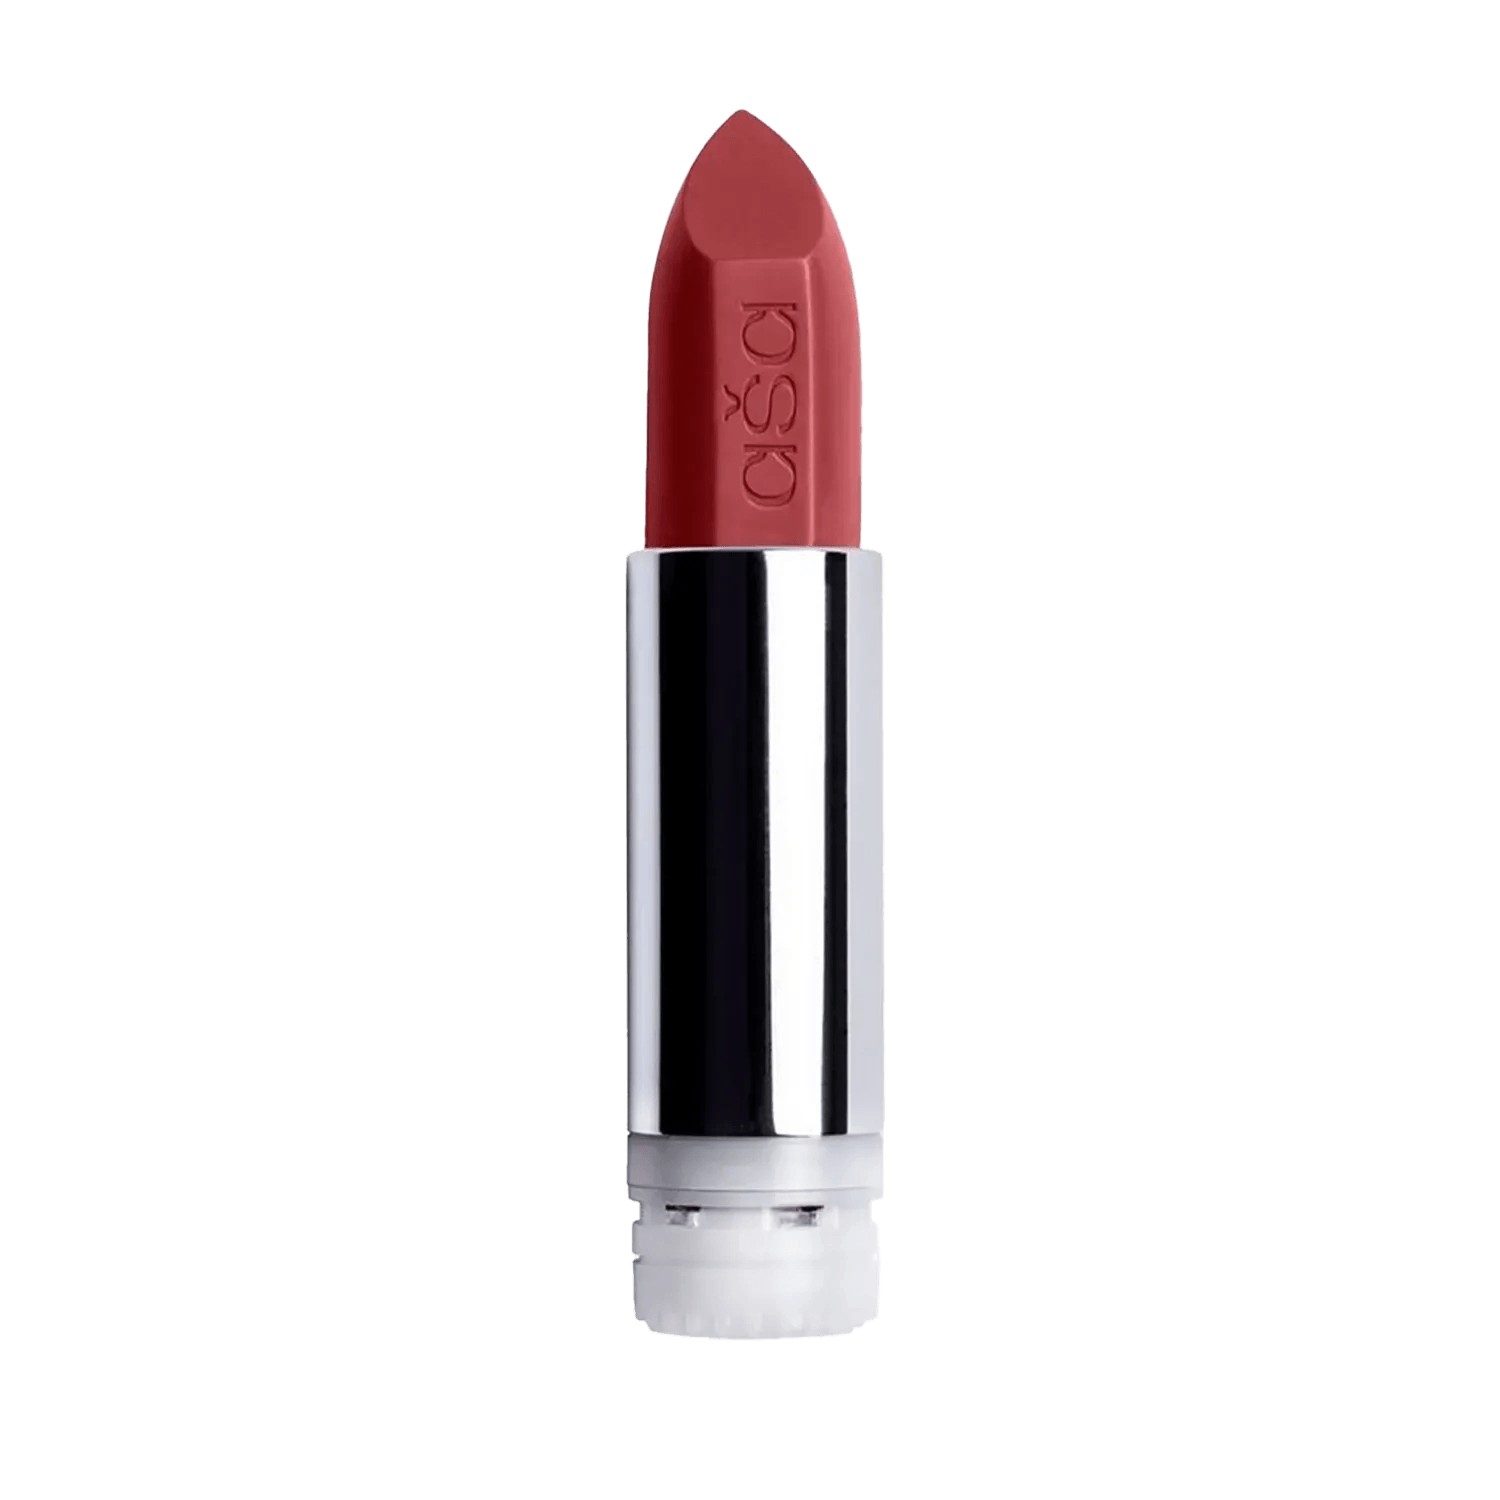 asa beauty | asa beauty Crème Lipstick - Fiery Fig C06 - Refill (4.2g)